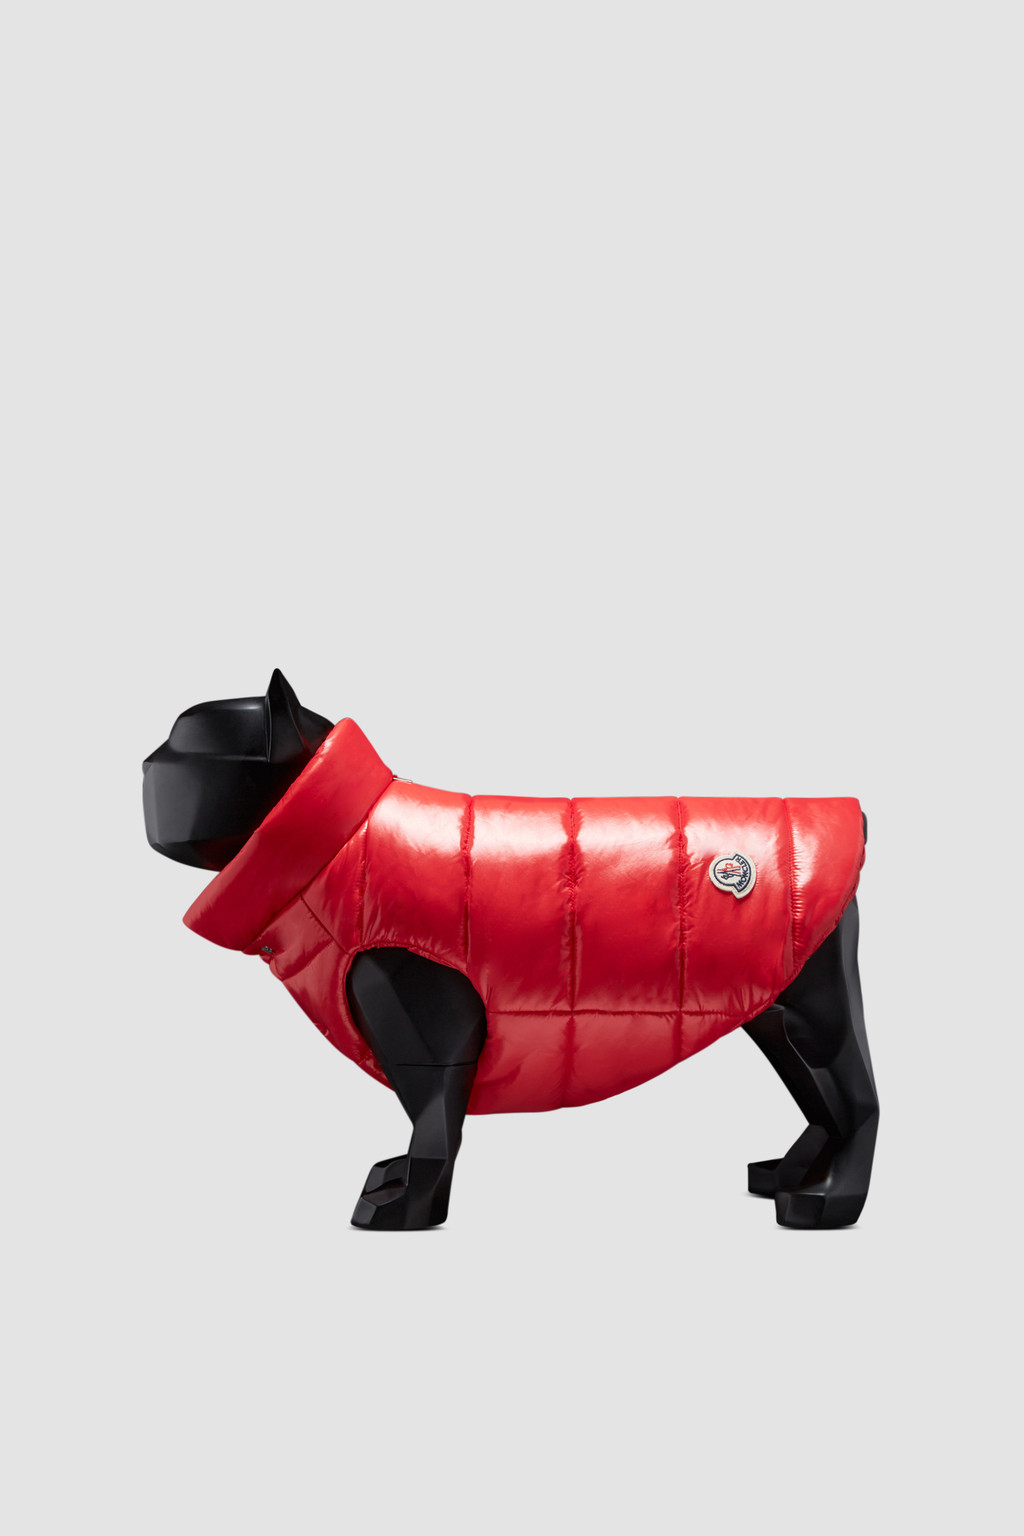 Moncler Poldo Dog Couture for Special Projects - Moncler x Poldo 